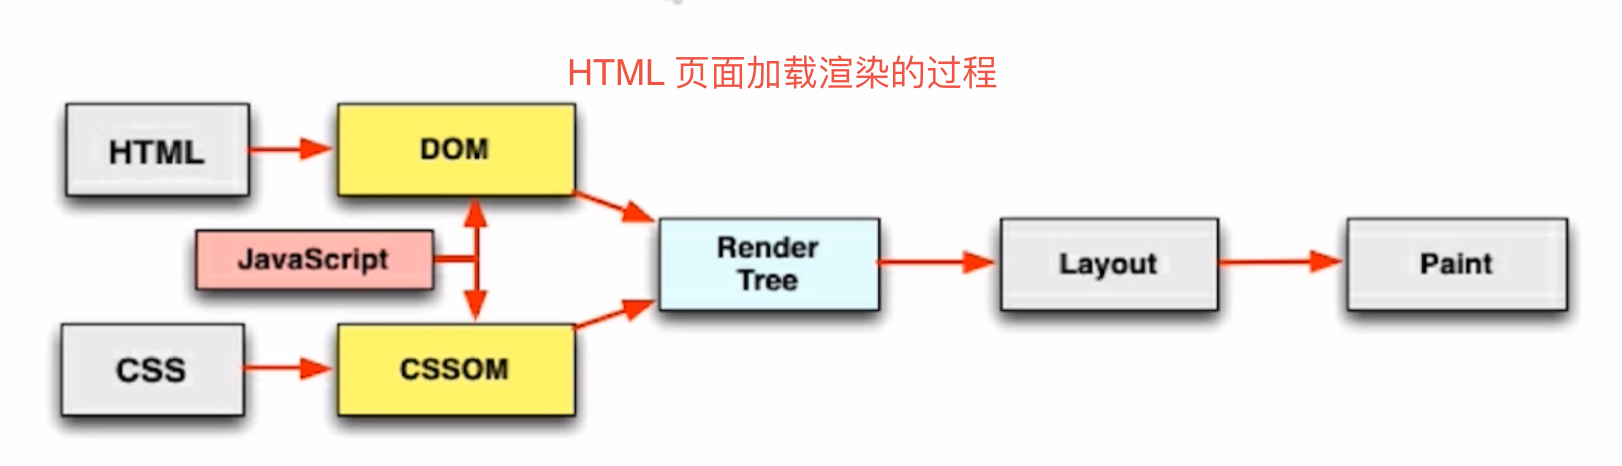 HTML 页面加载渲染的过程